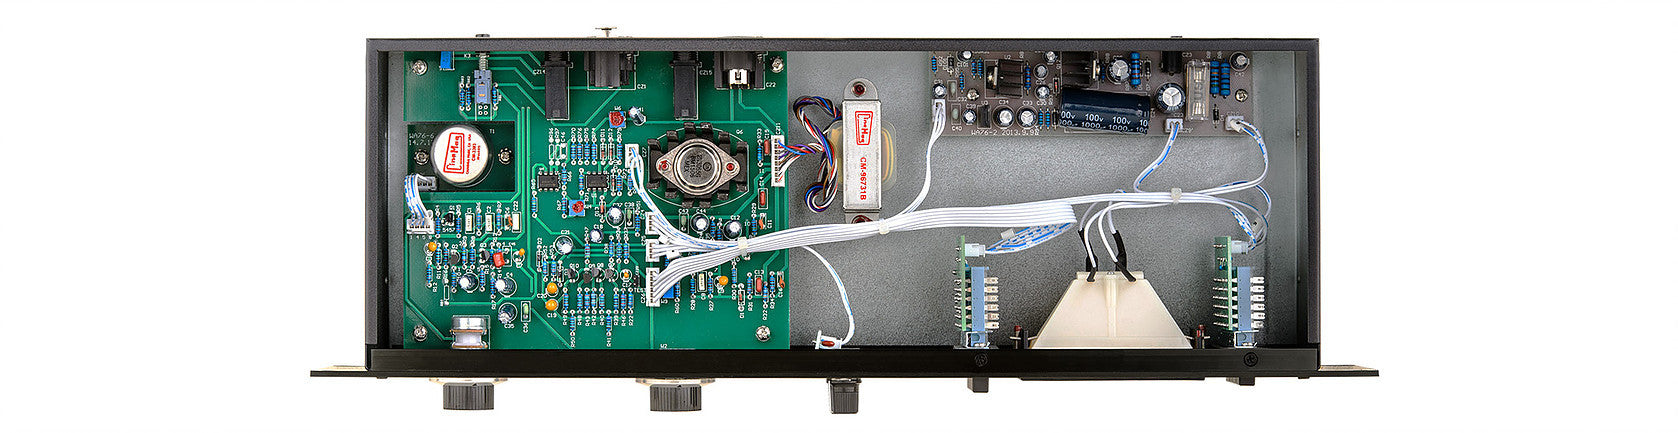 Recording Equipment - Warm Audio - Warm Audio WA76 1176 Style Compressor - Professional Audio Design, Inc